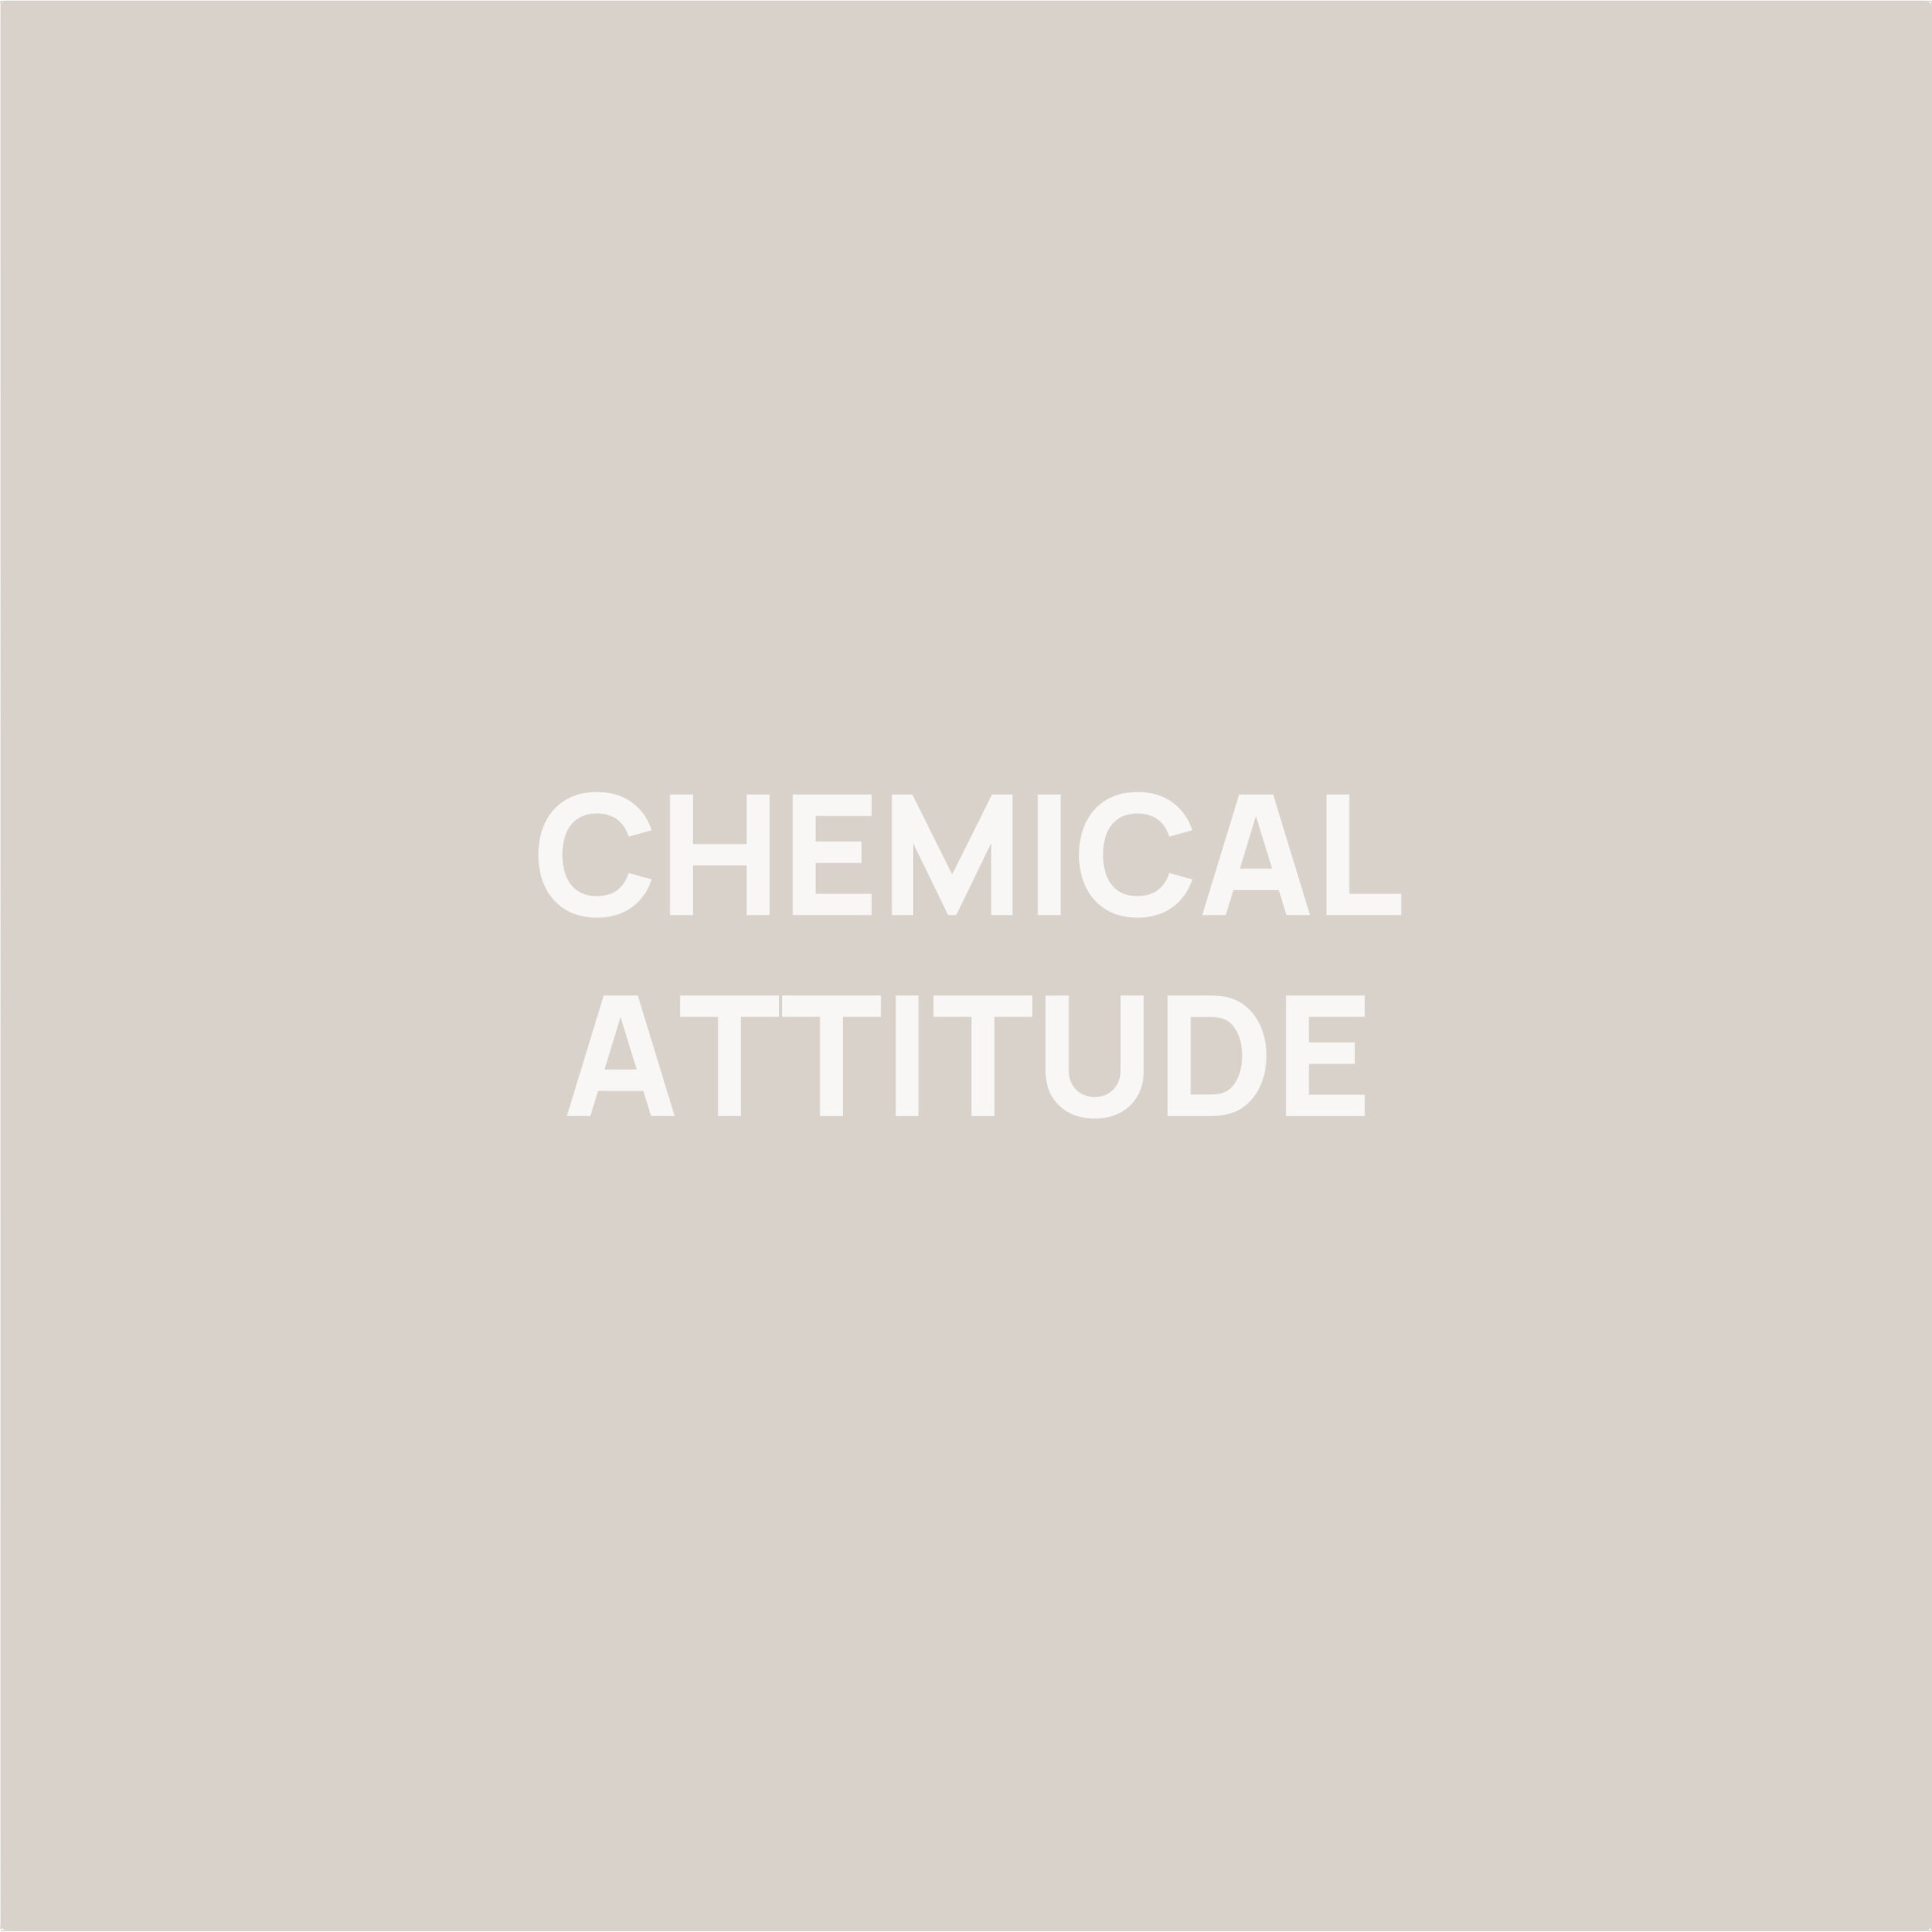 CHEMICAL ATTITUDE